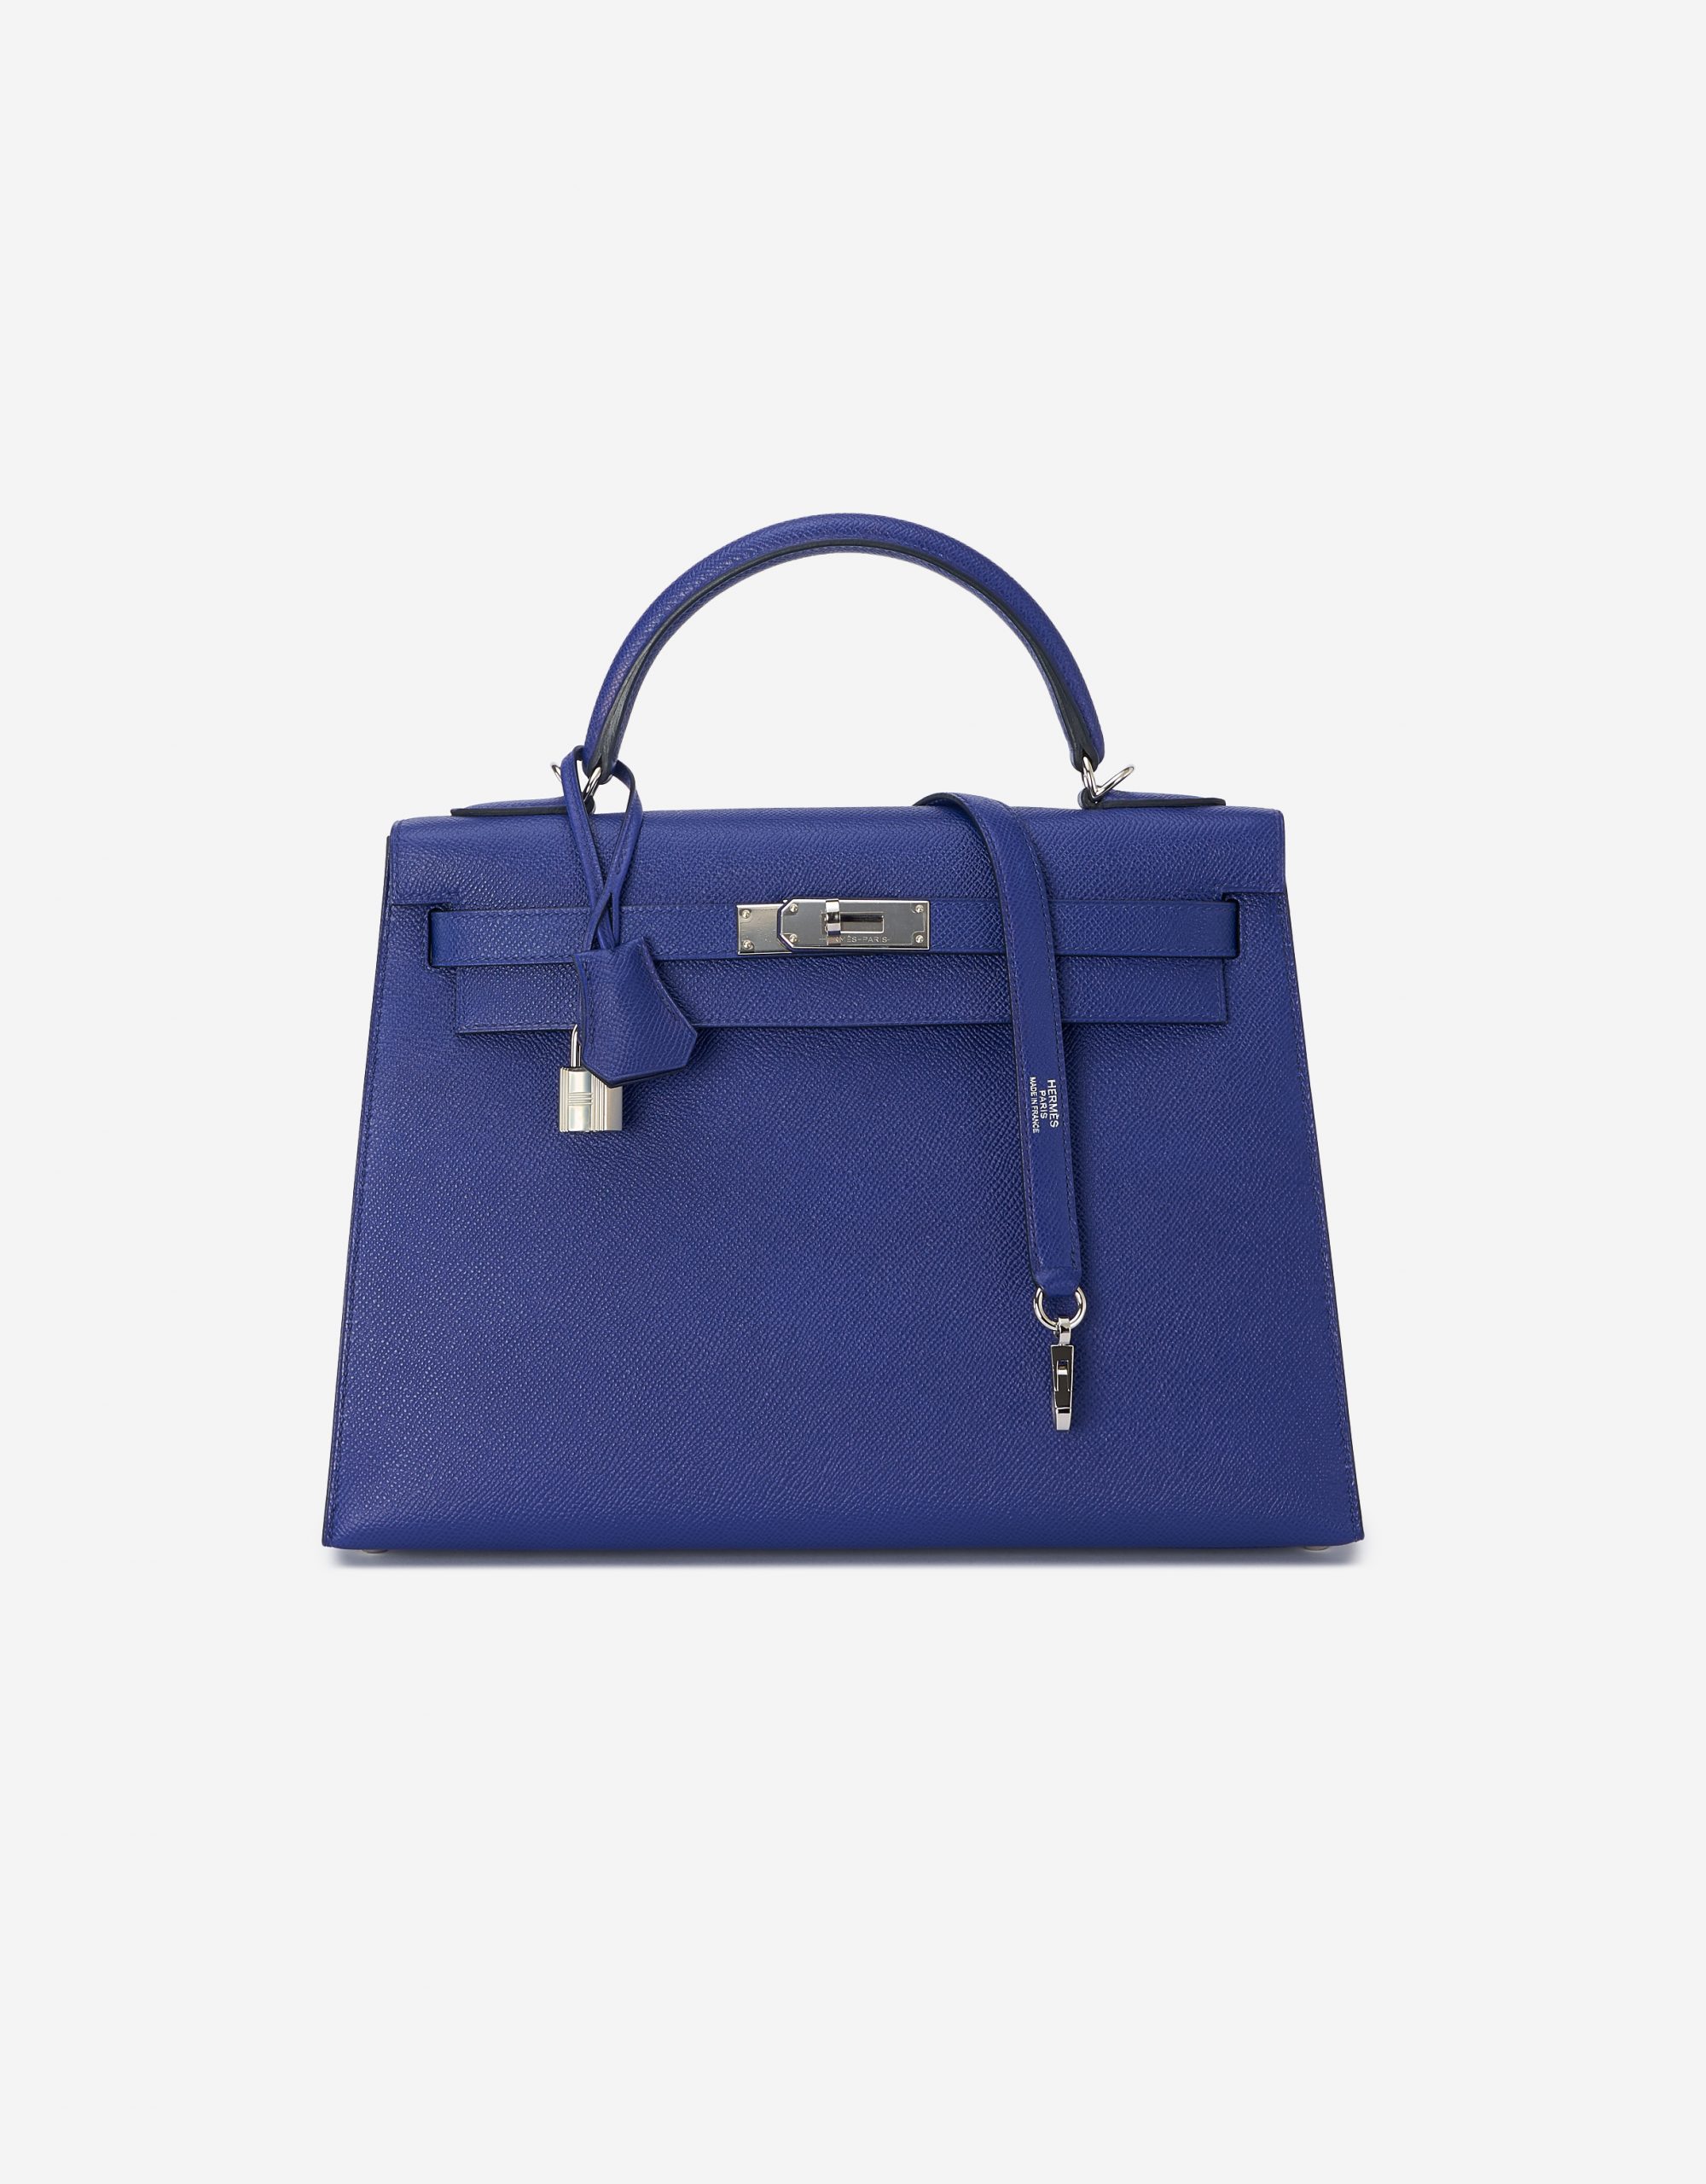 Hermès Kelly 32 Epsom Bleu Encre | SACLÀB